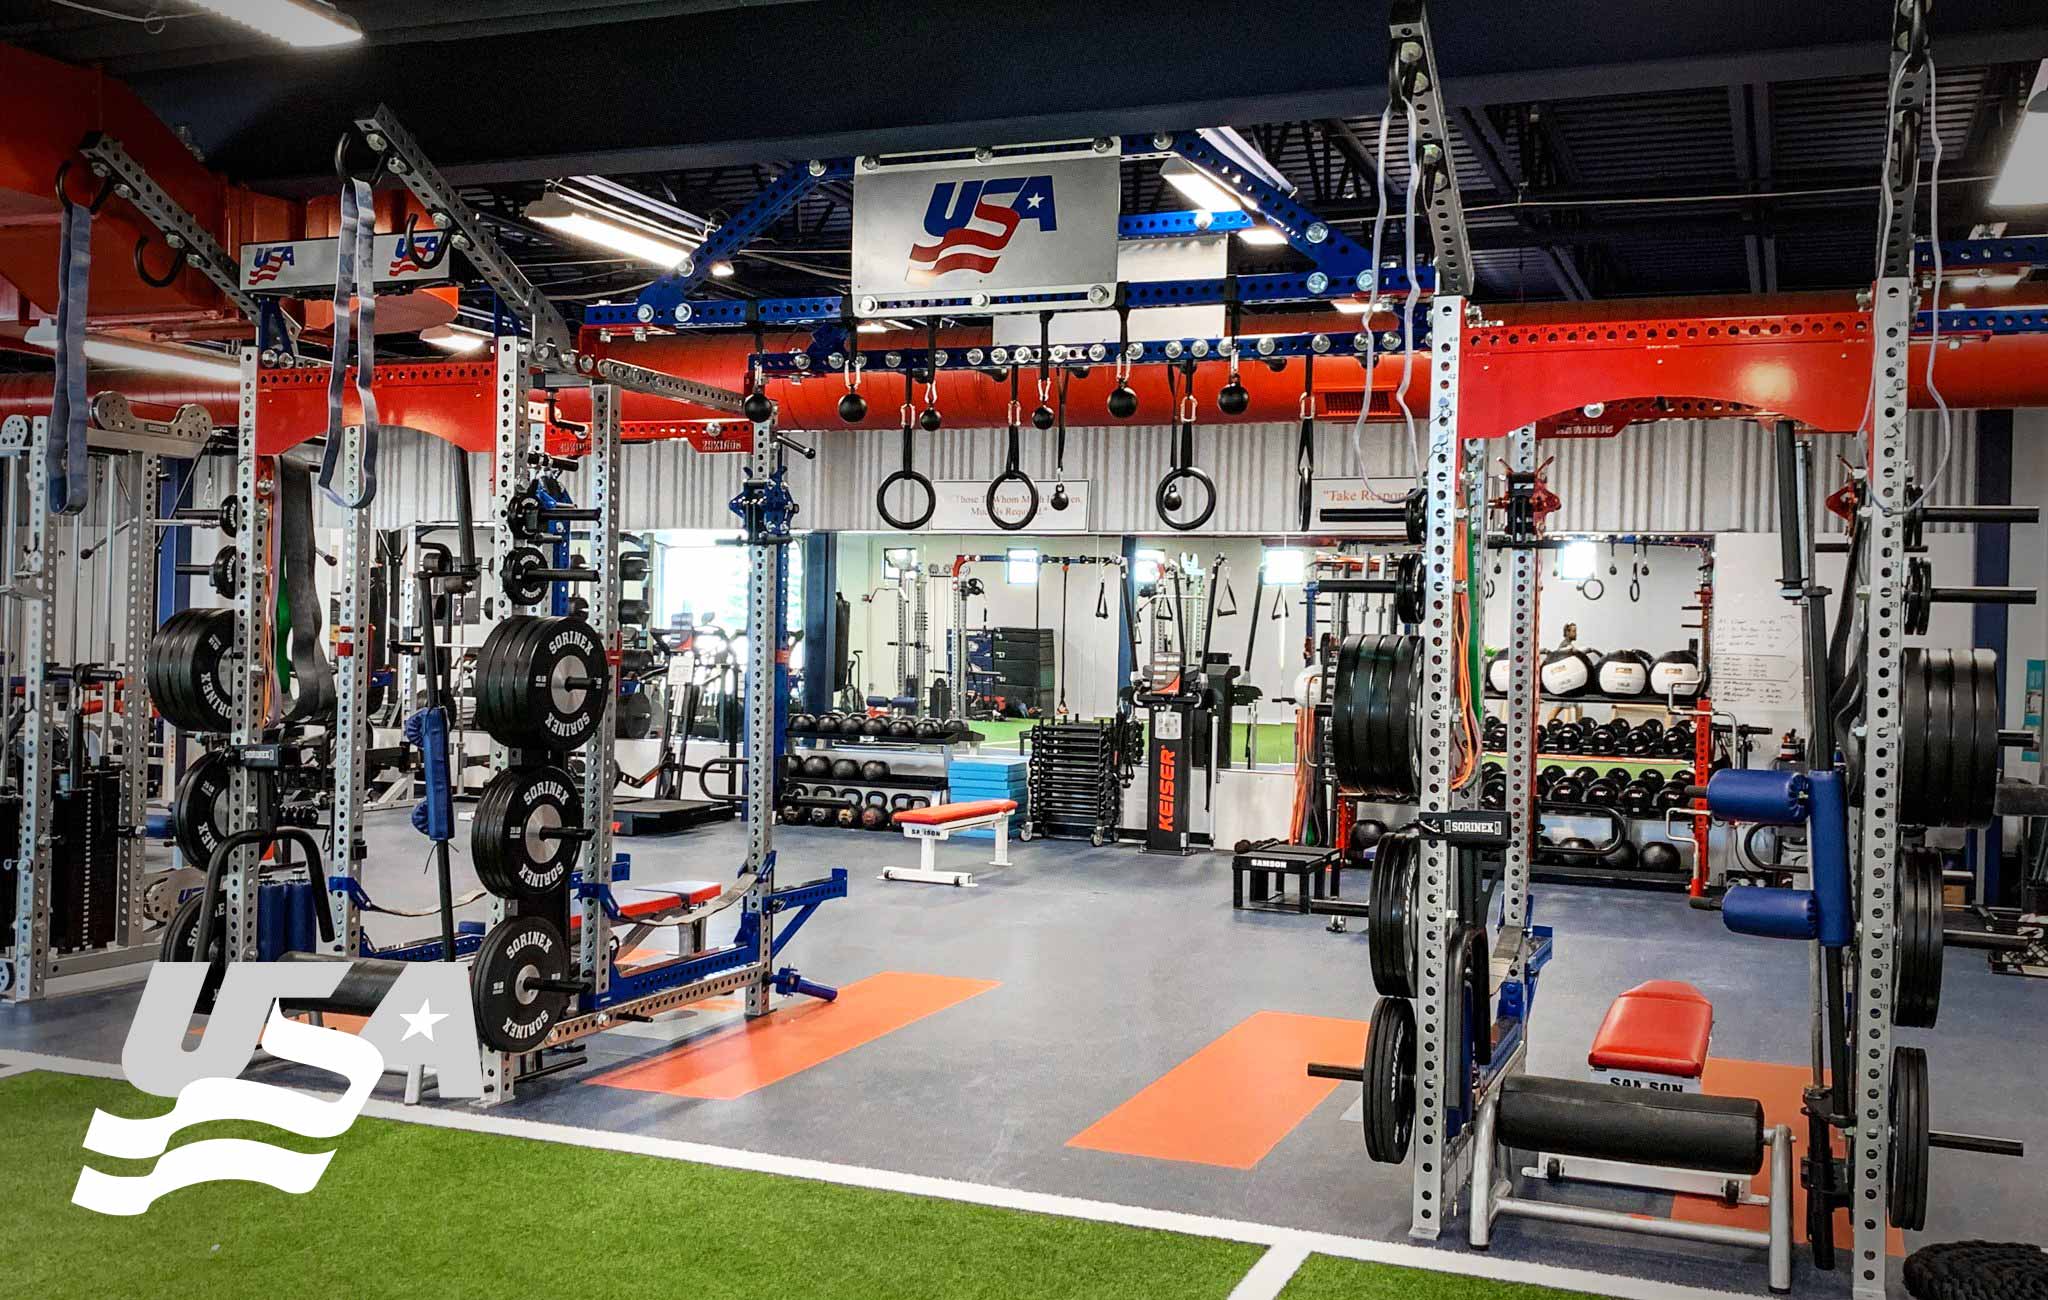 USA hockey Sorinex strength and conditioning facility